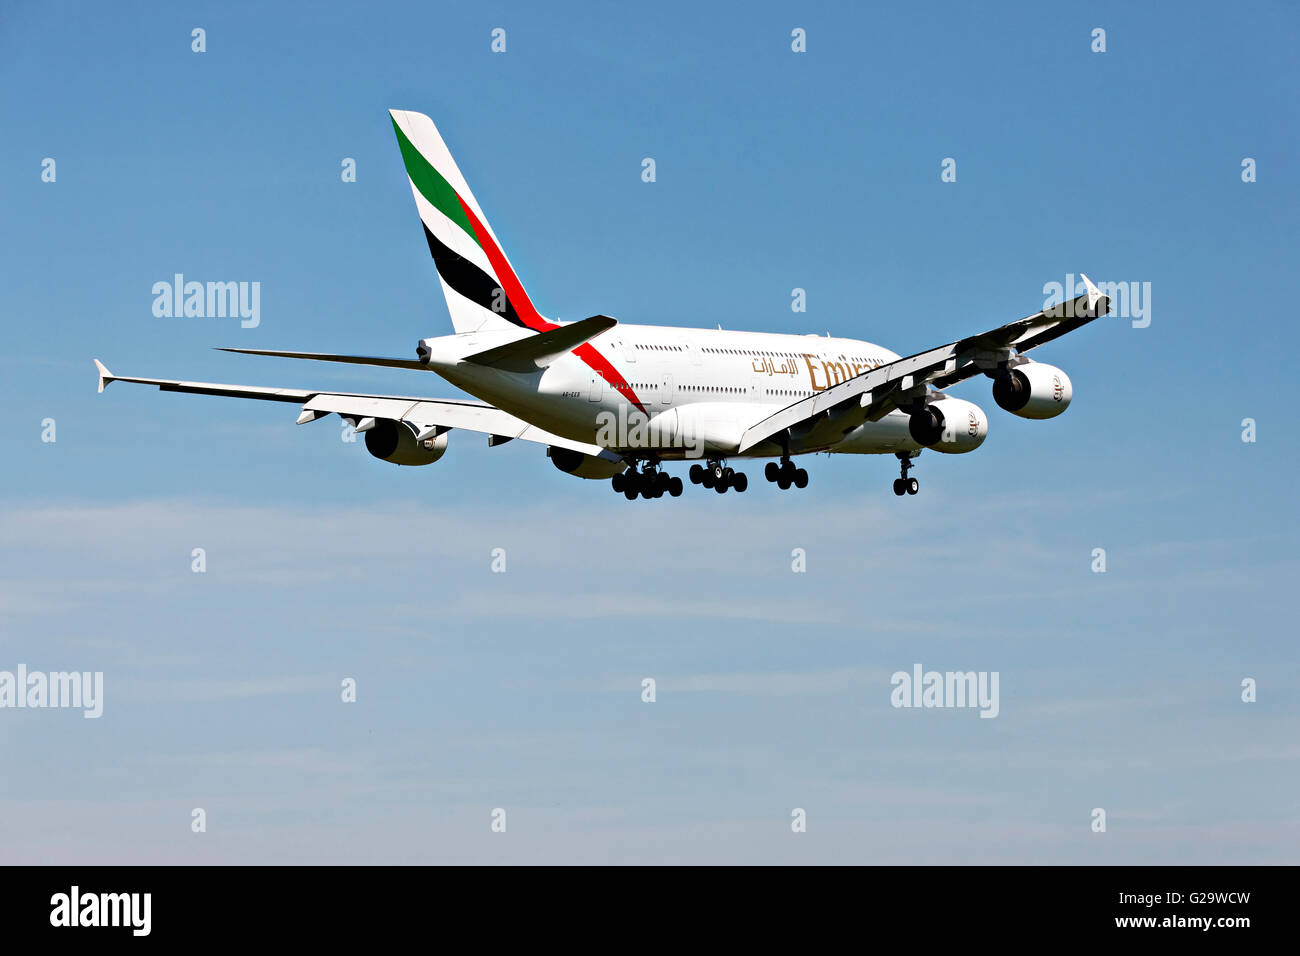 Emirates Airbus A380-800 passenger aircraft seen from behind, on landing approach to  Franz Josef Strauss Airport, Munich Stock Photo